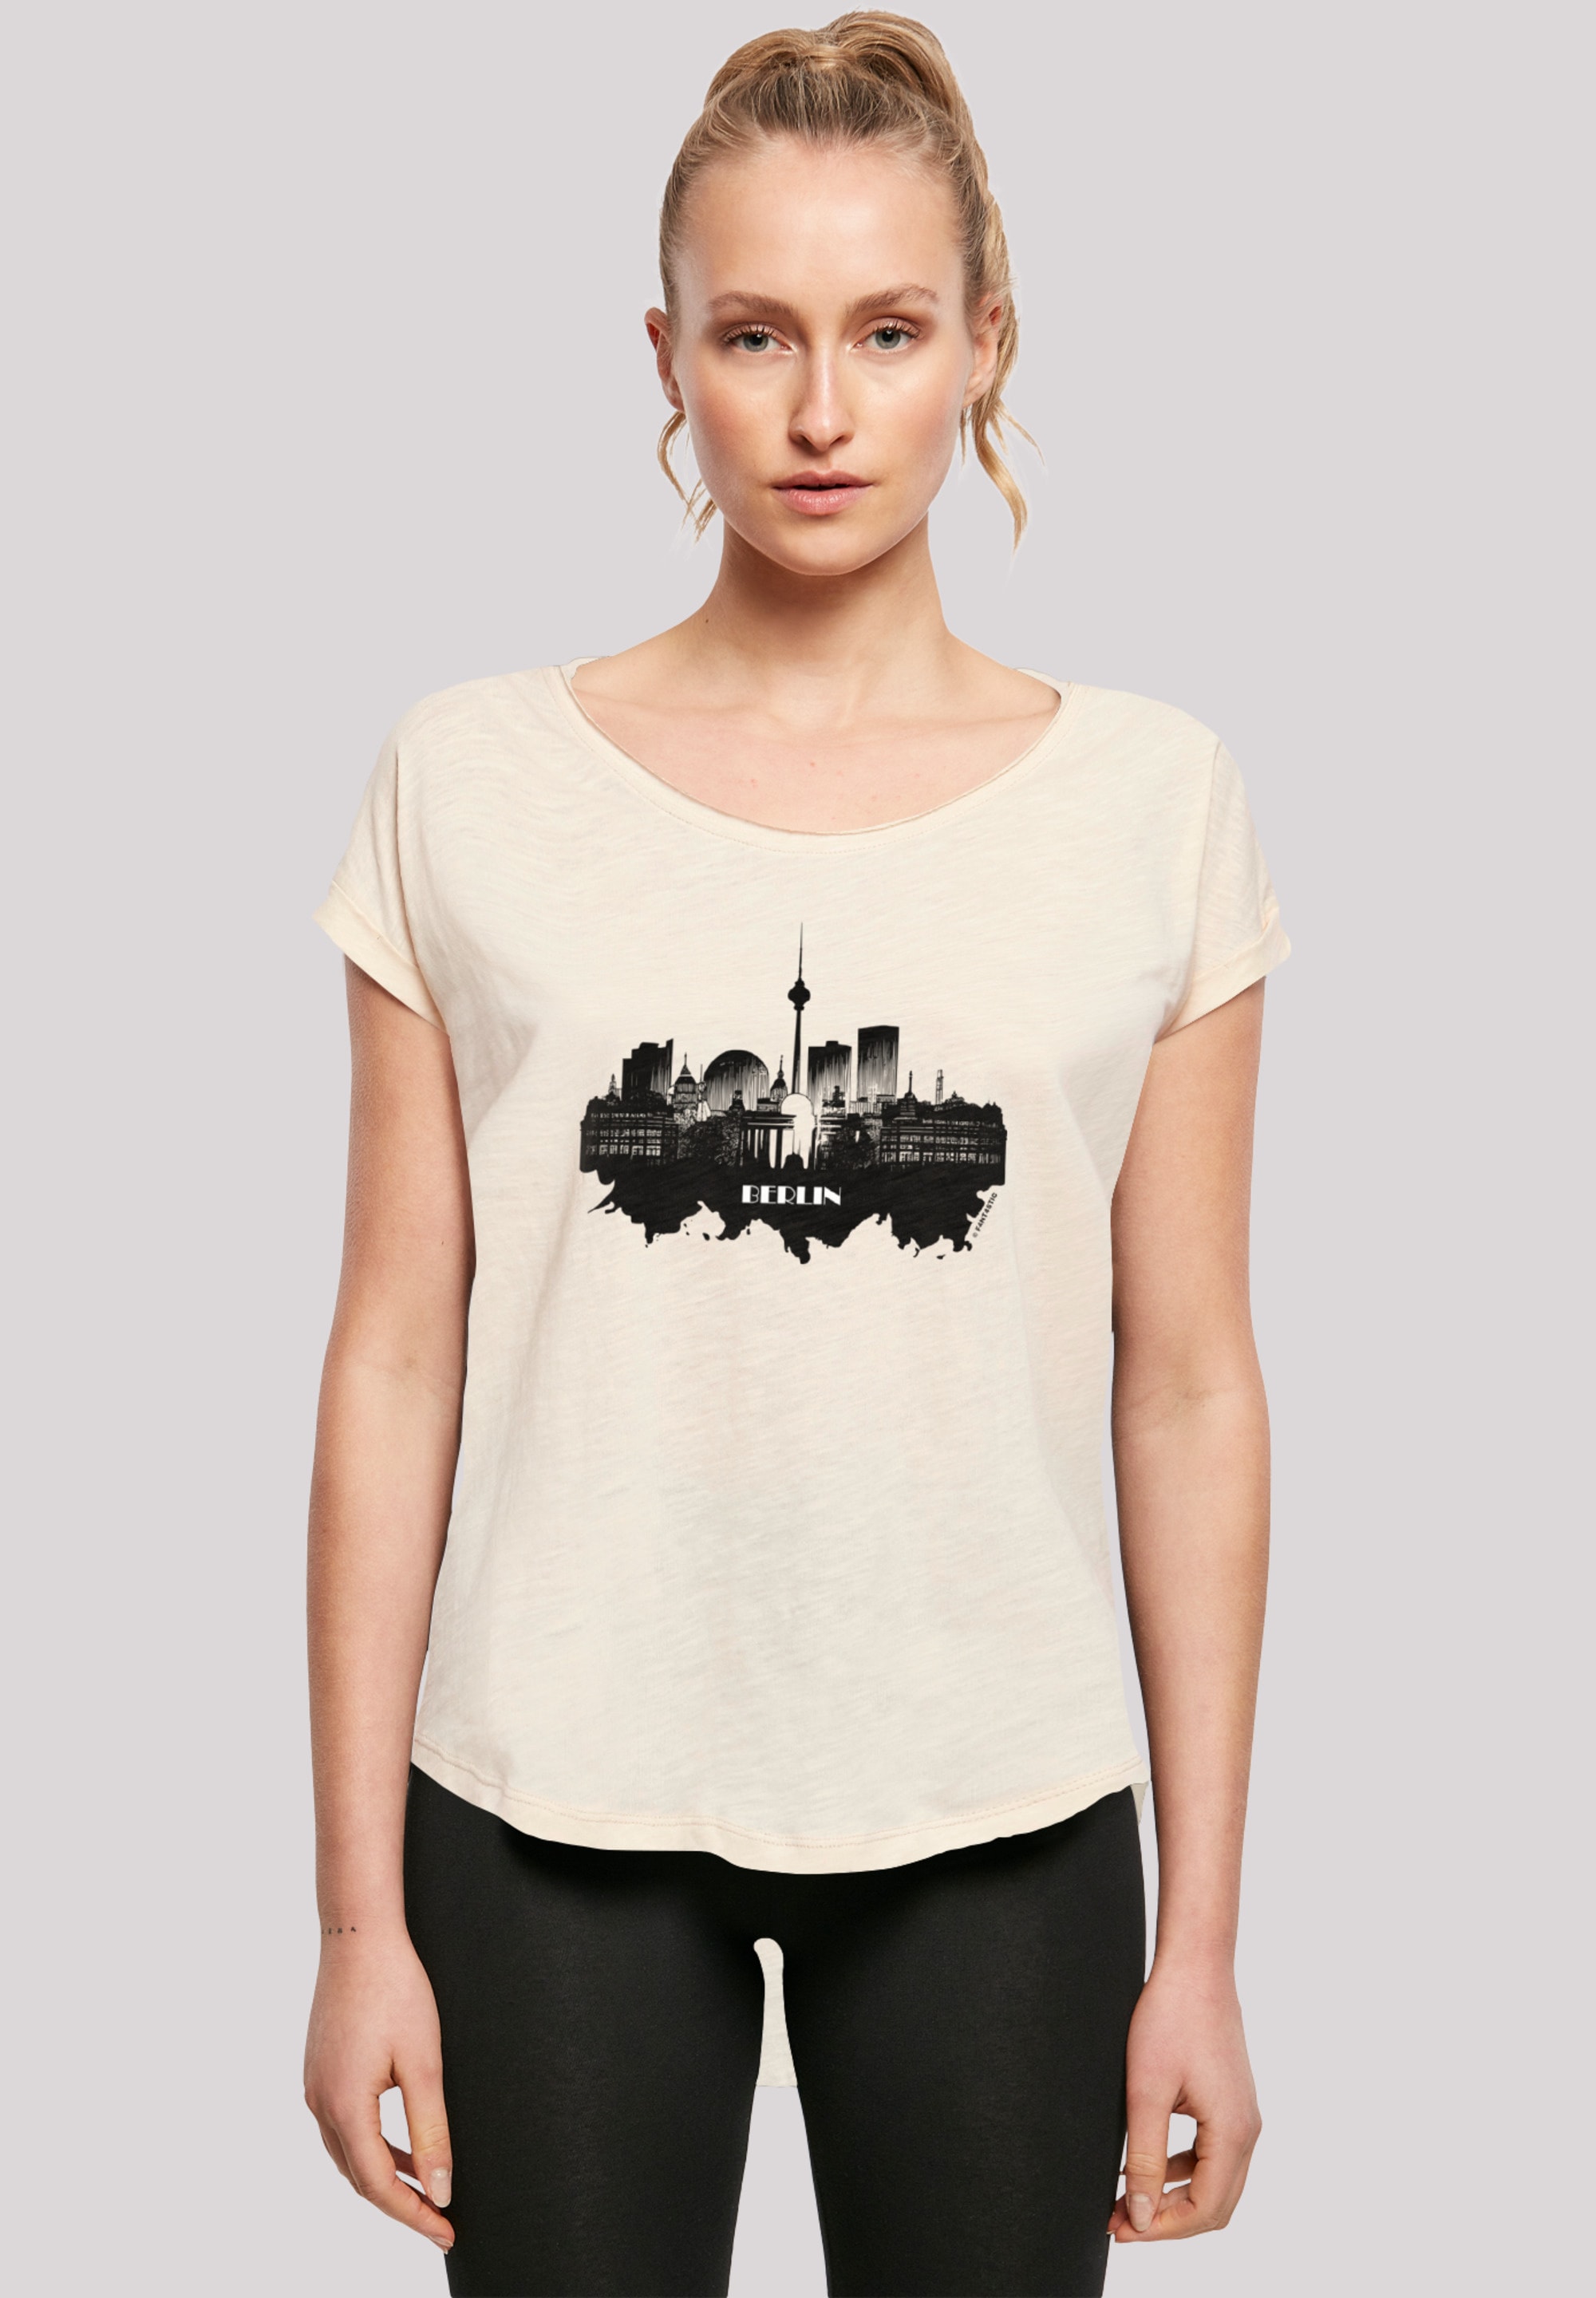 T-Shirt »Cities Collection - Berlin skyline«, Print